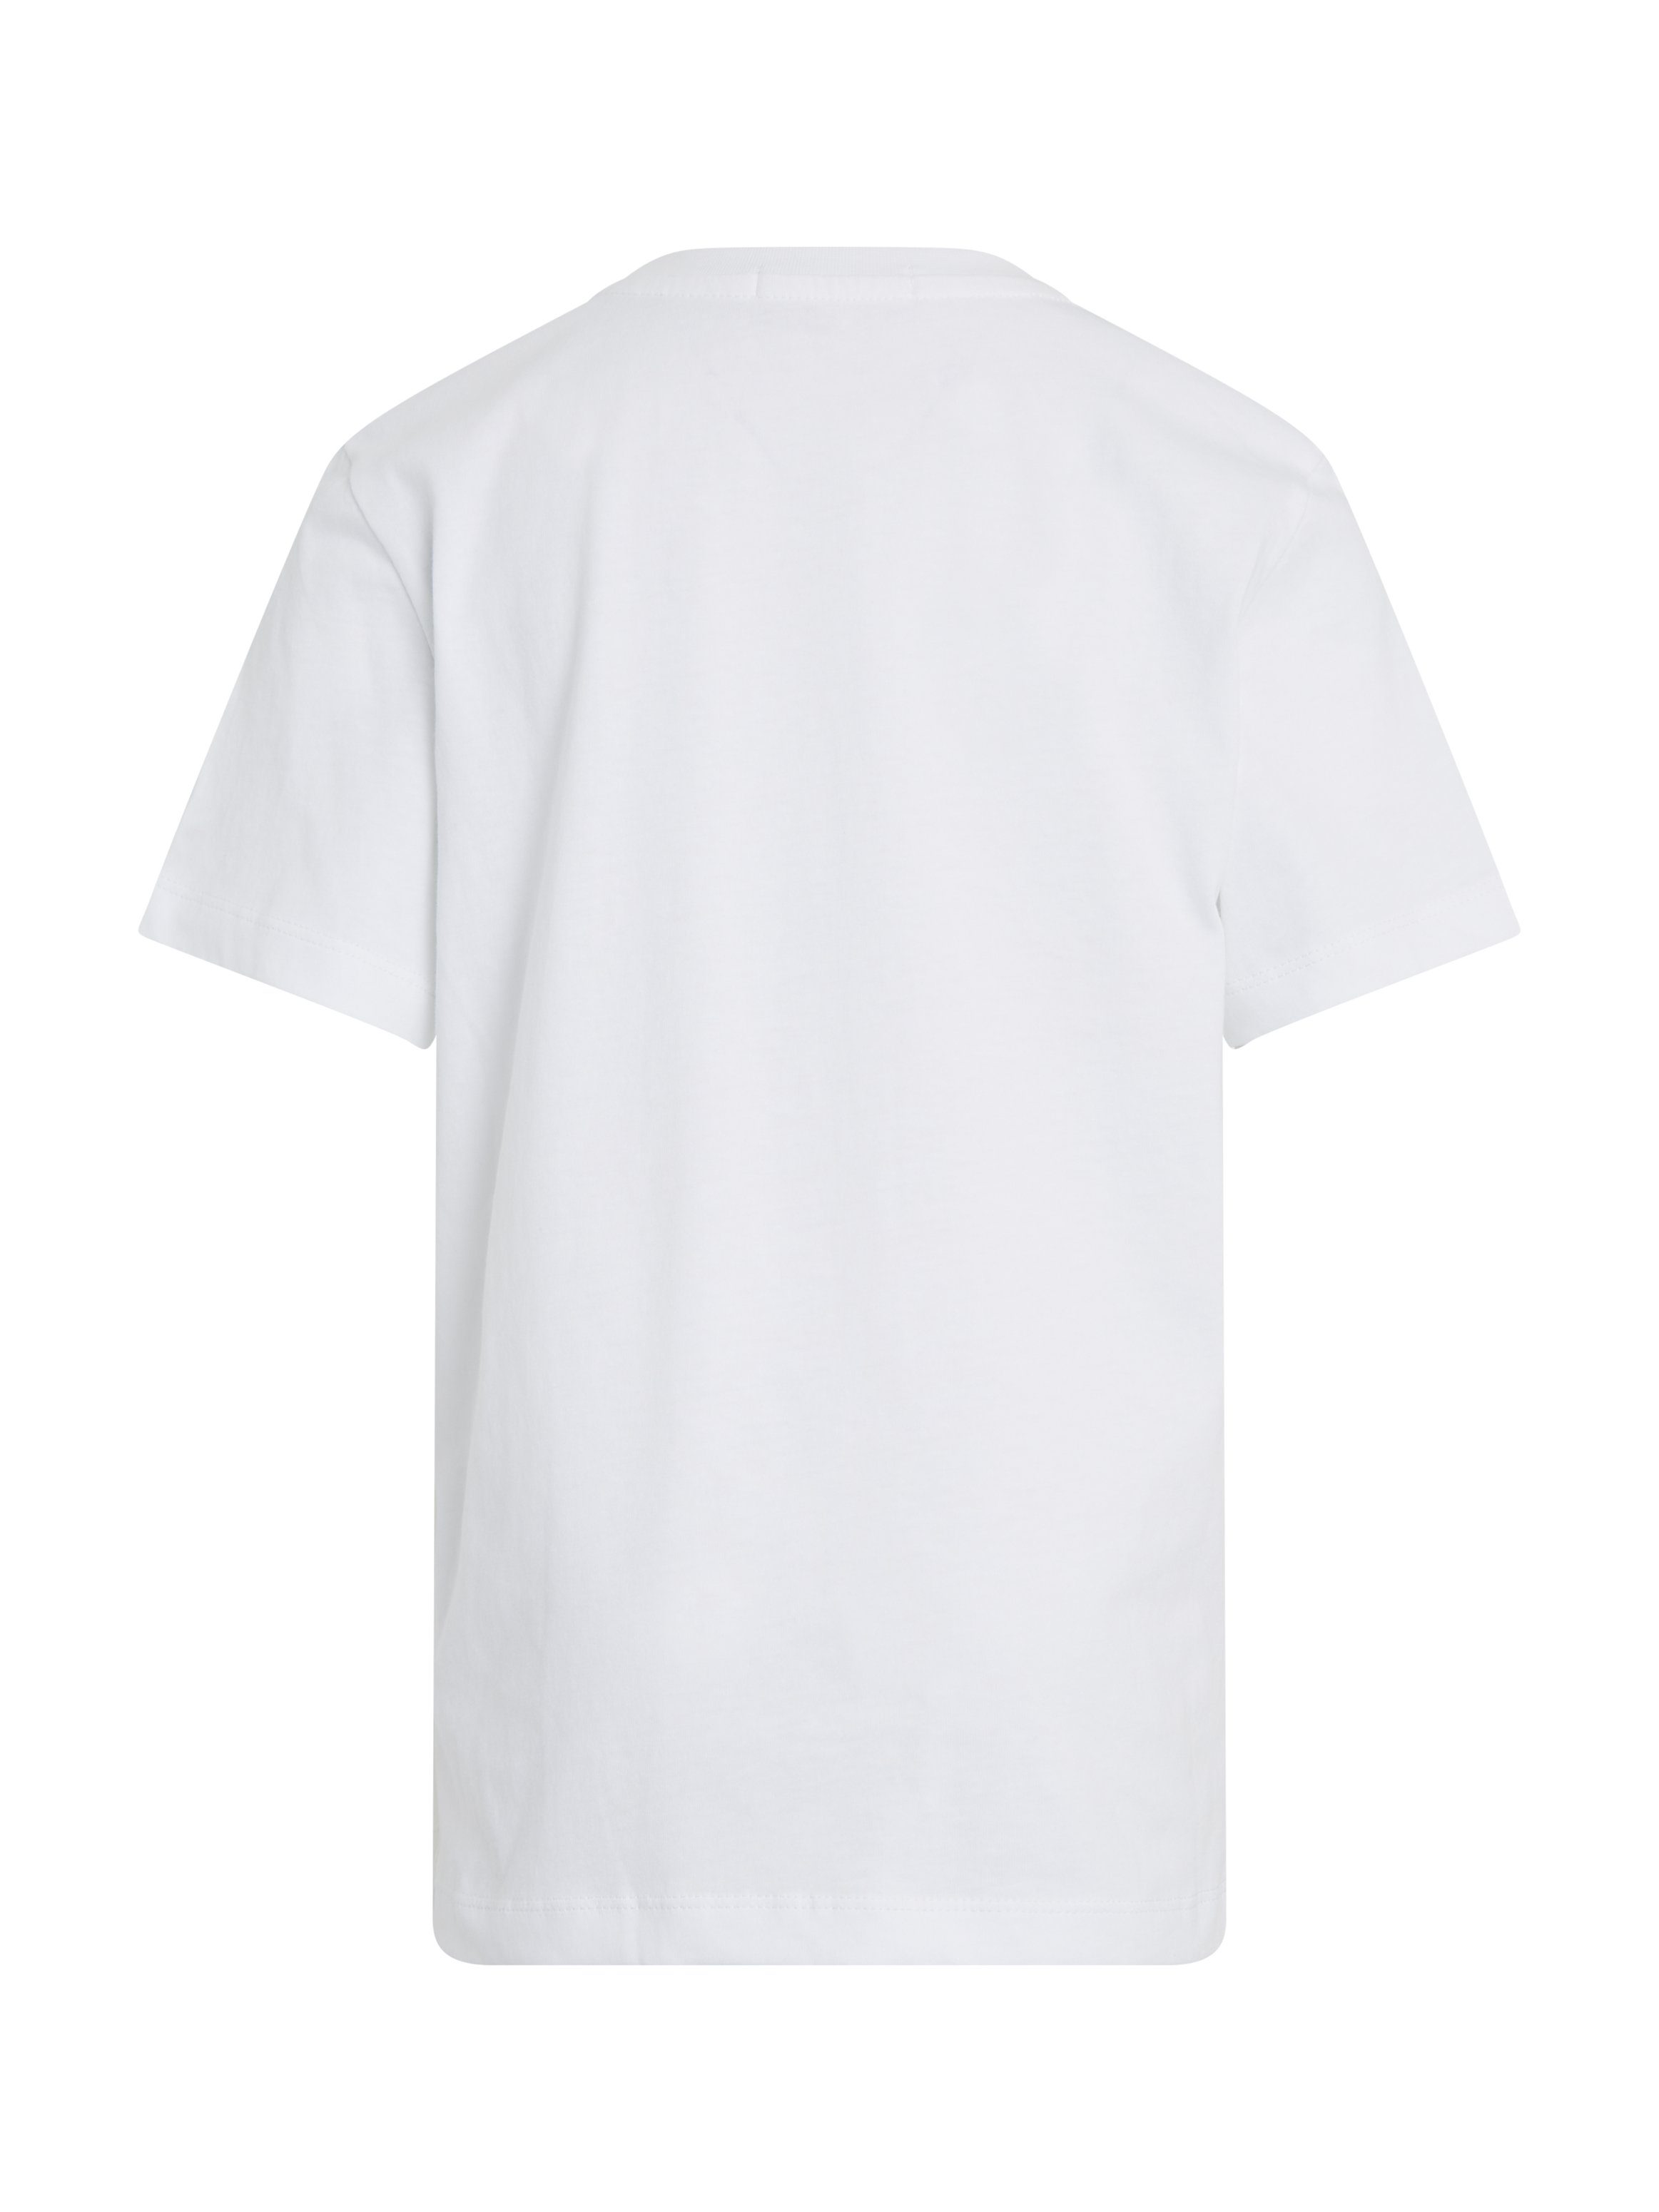 CK T-SHIRT Klein SS Jeans MONOGRAM White Bright T-Shirt Calvin